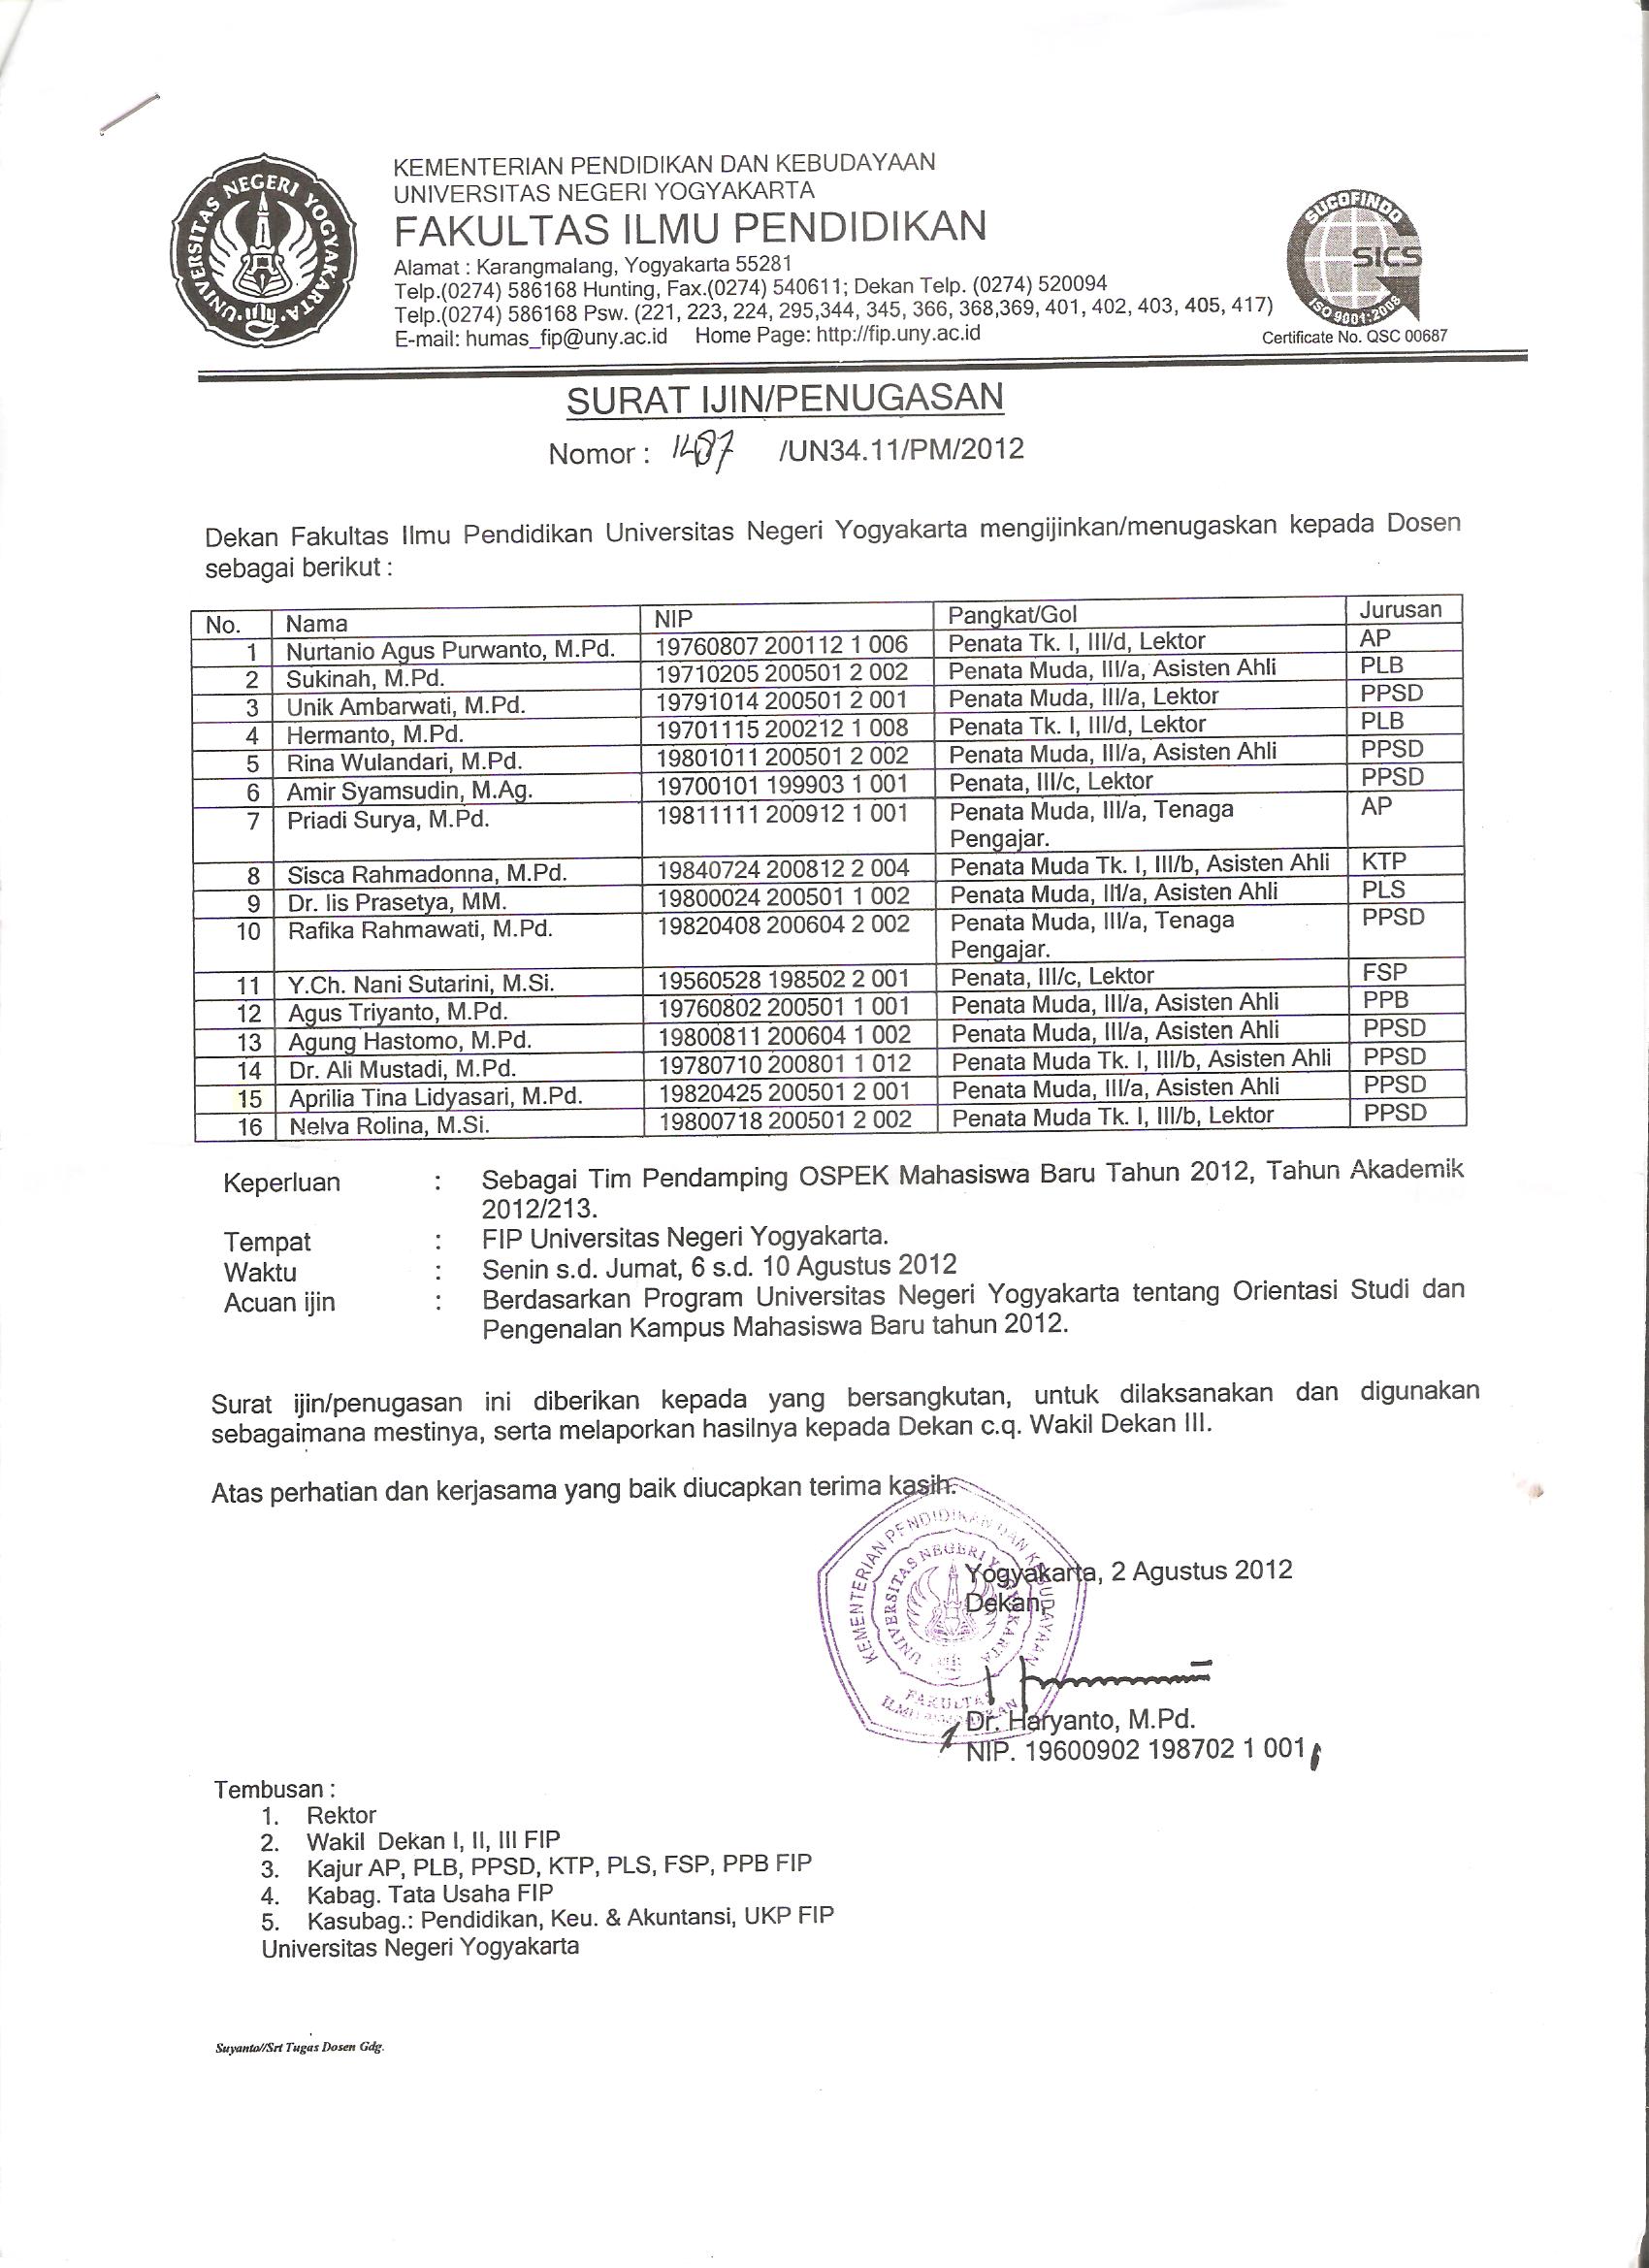 Staff Site Universitas Negeri Yogyakarta Aprilia Tina